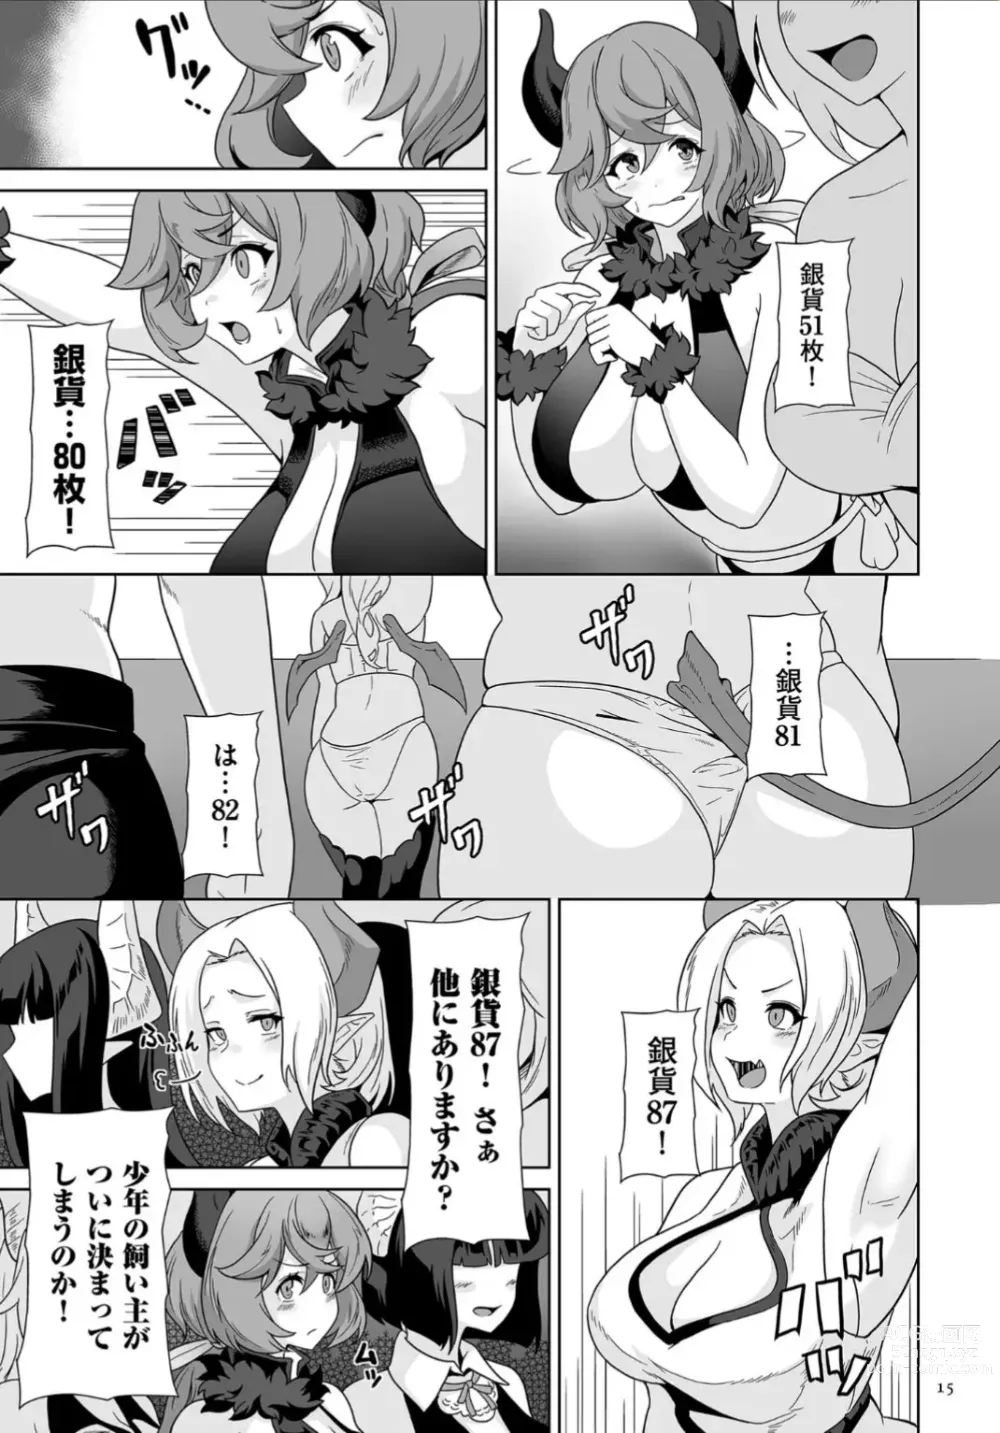 Page 15 of manga Succubus Kingdom